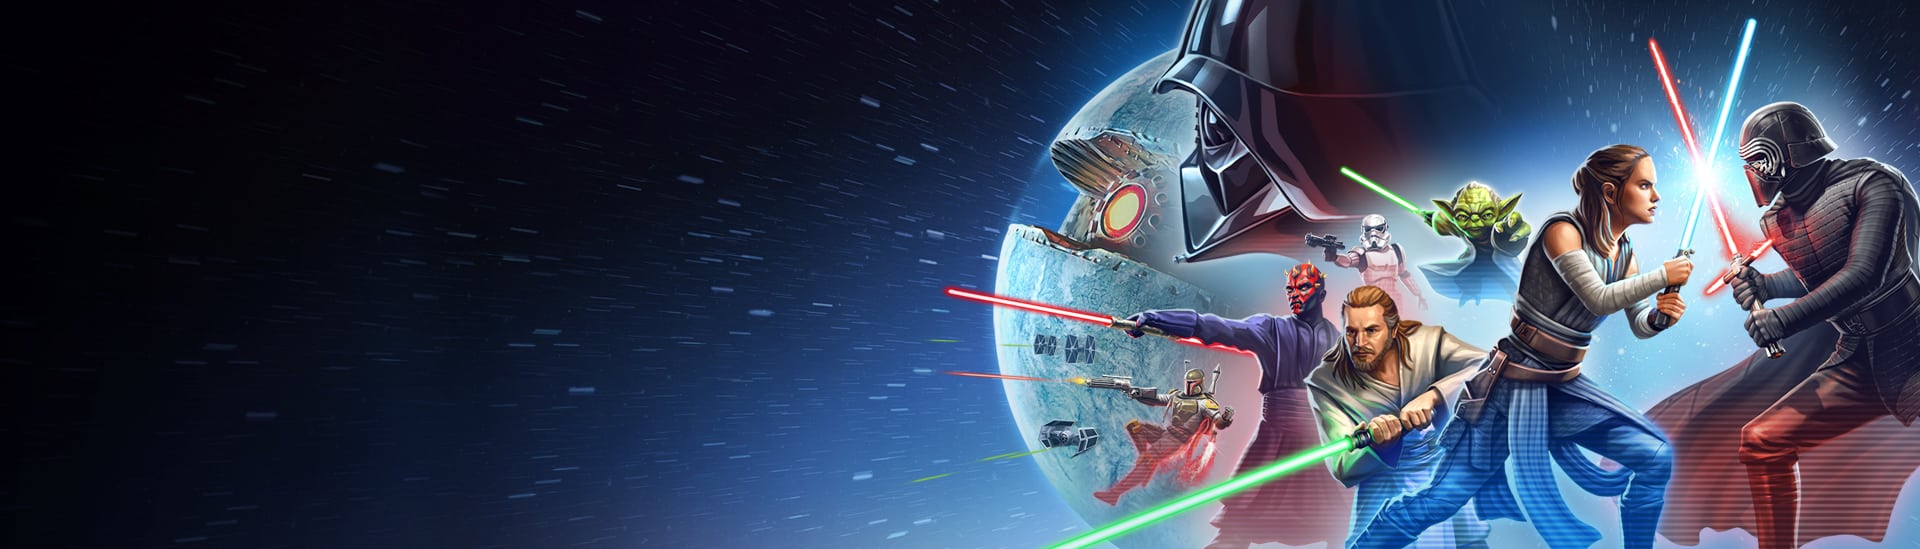 Star Wars Galaxy of Heroes Teaser Image